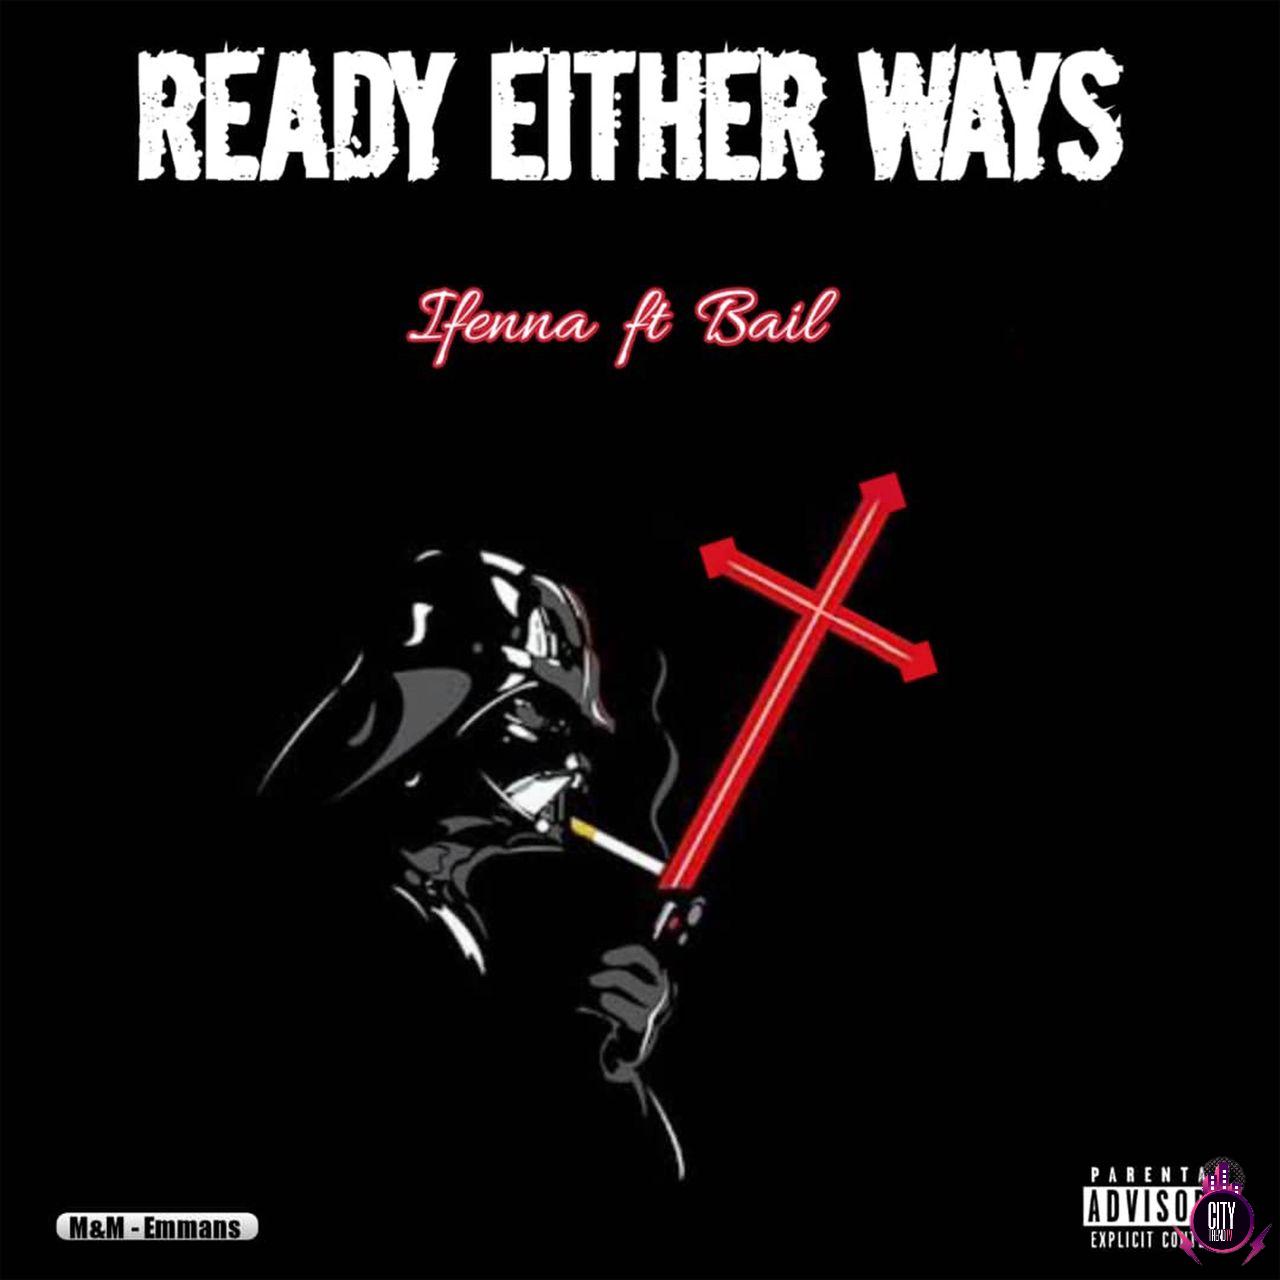 Ifenna ft. Bail — Ready Either Ways